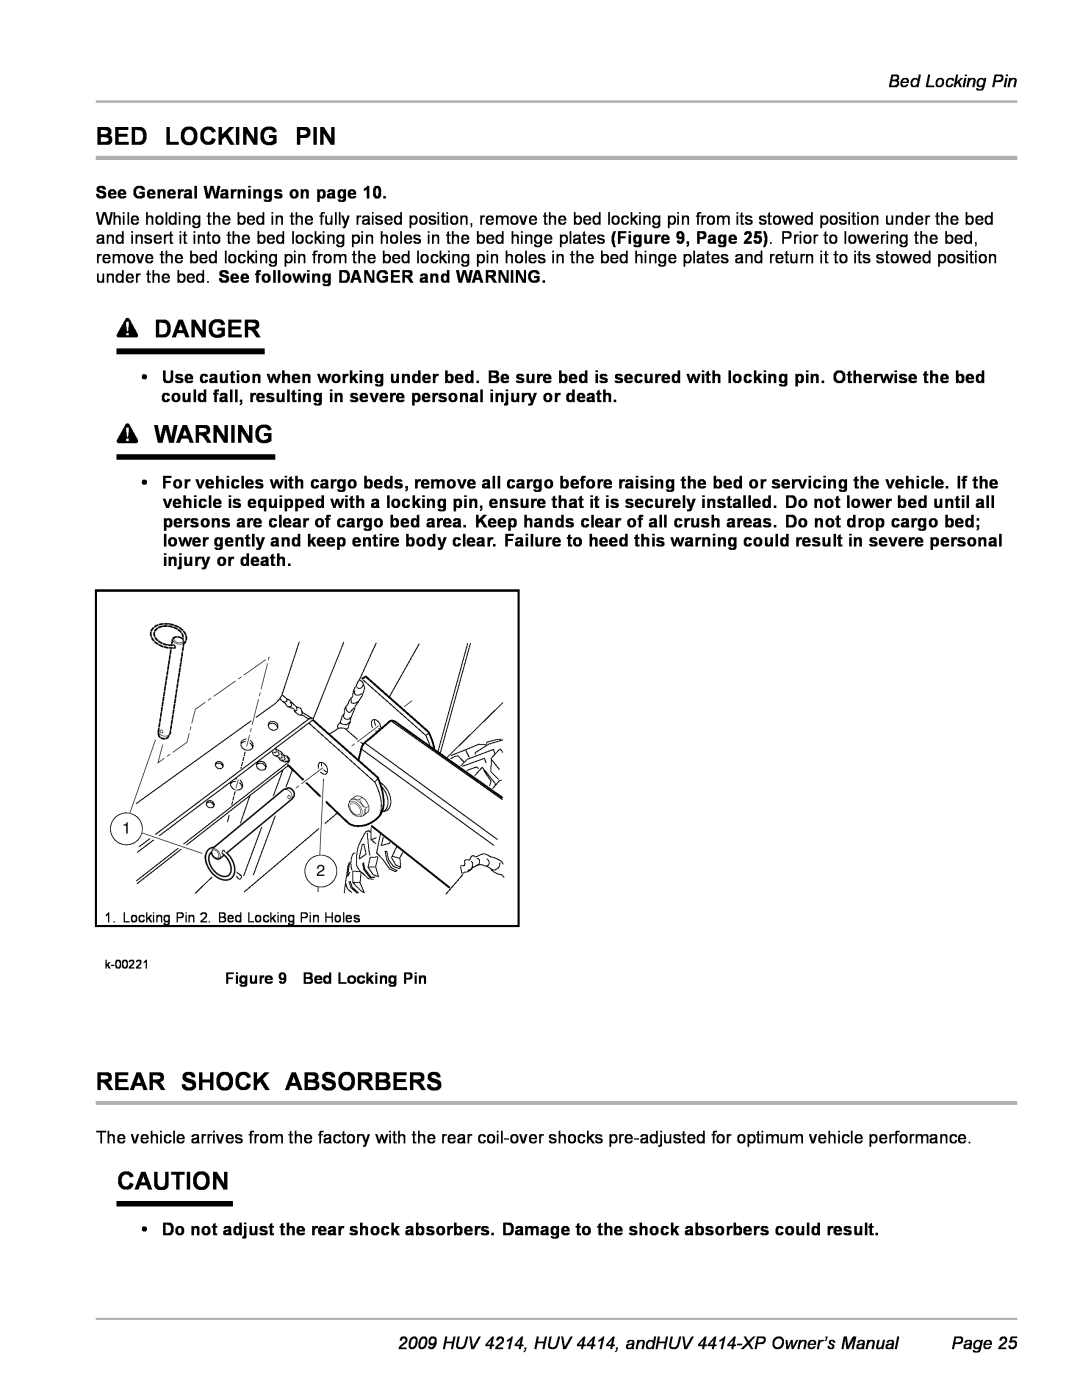 Husqvarna Bed Locking Pin, Rear Shock Absorbers, Danger, HUV 4214, HUV 4414, andHUV 4414-XP Owner’s Manual, Page 